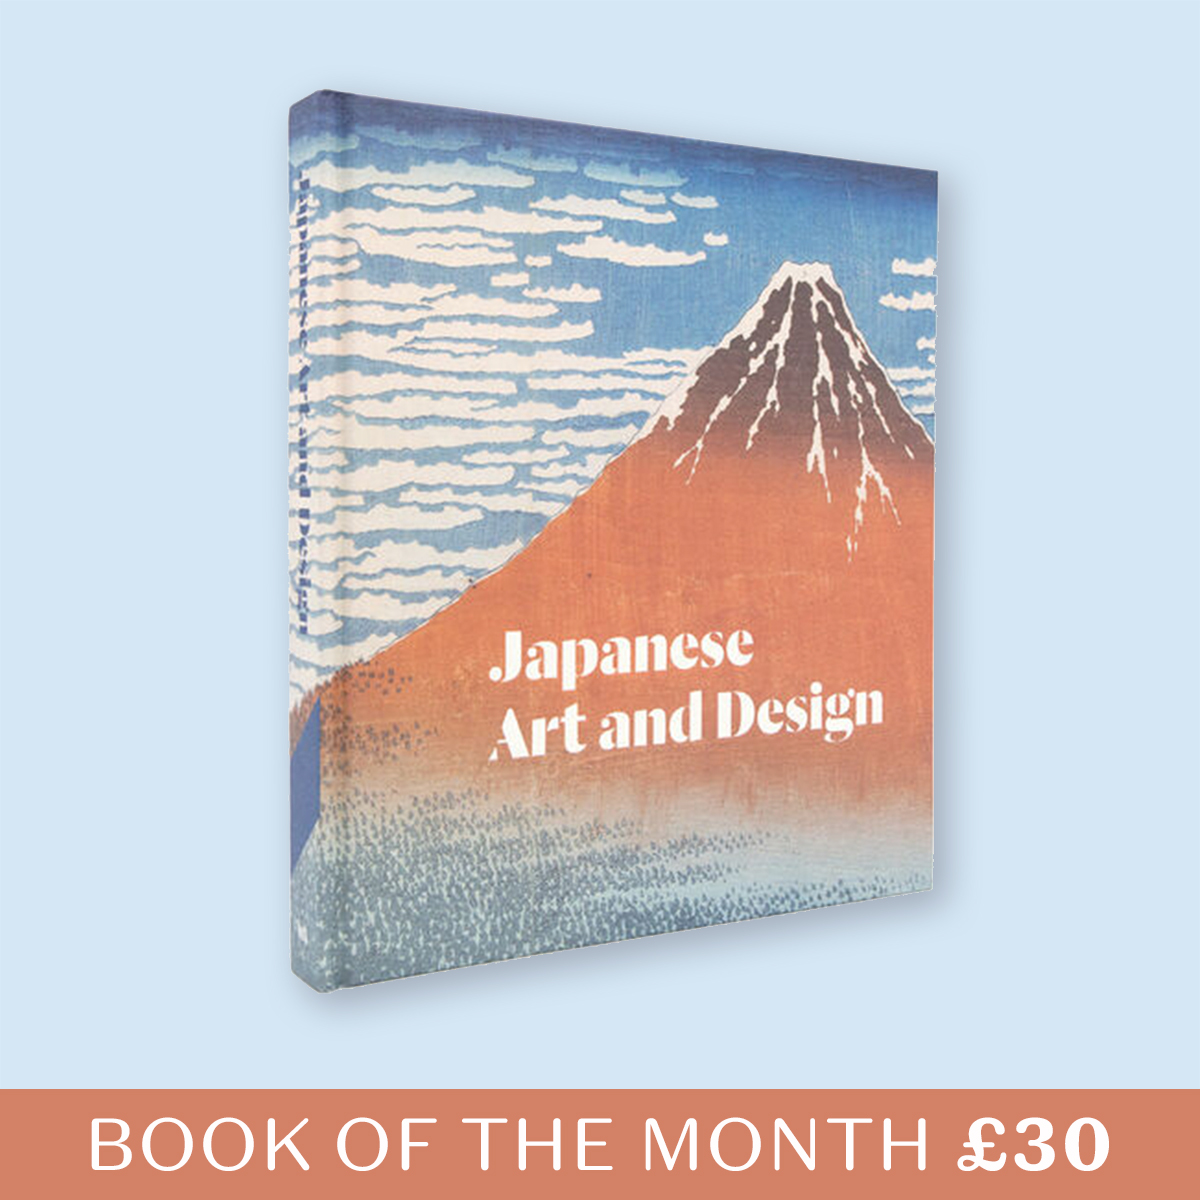 Japanese Art and Design (Hardback)